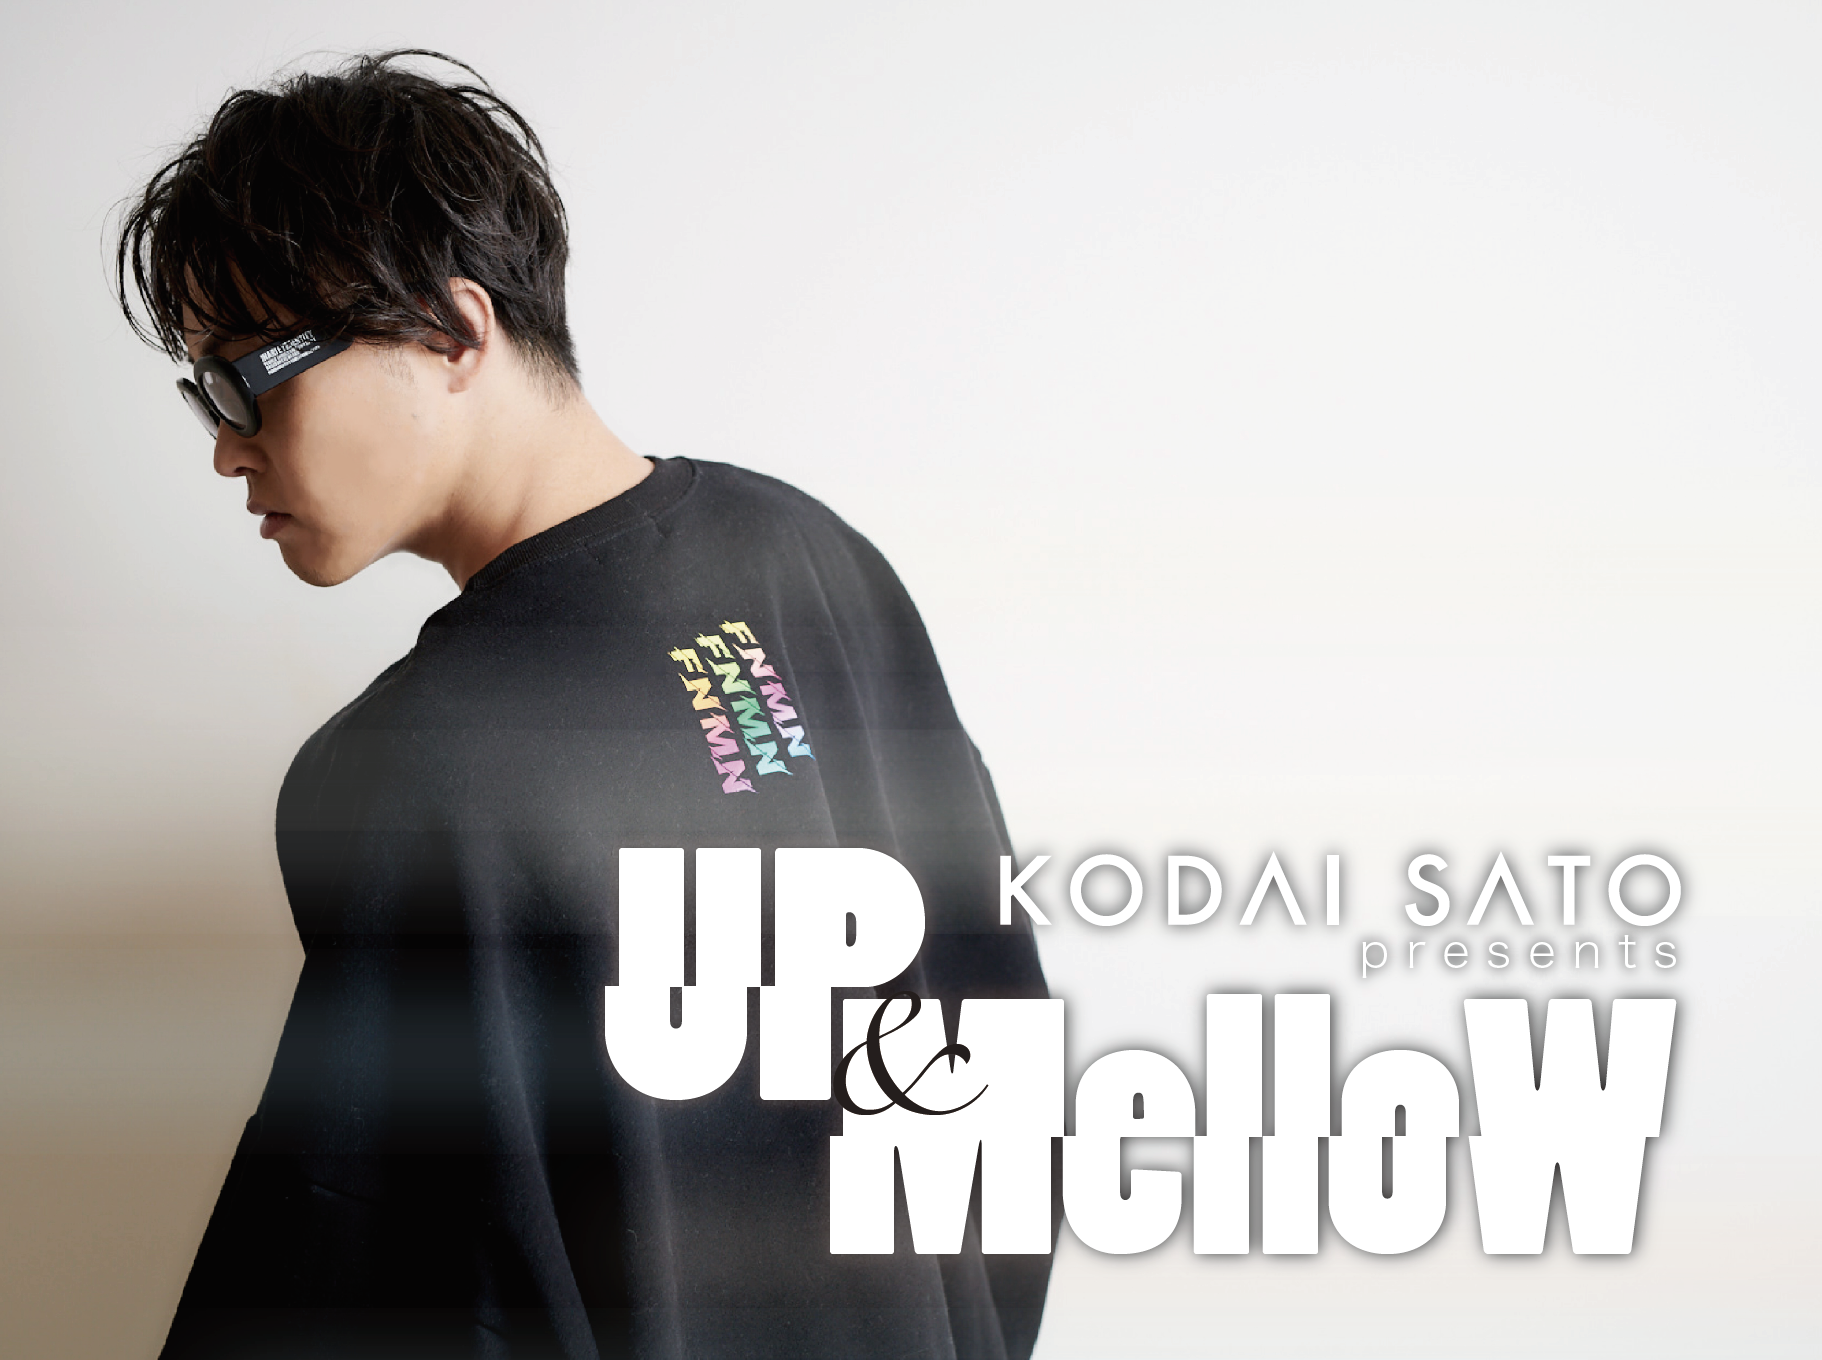 【FC先行受付!!】 KODAI SATO presents UP&Mellow